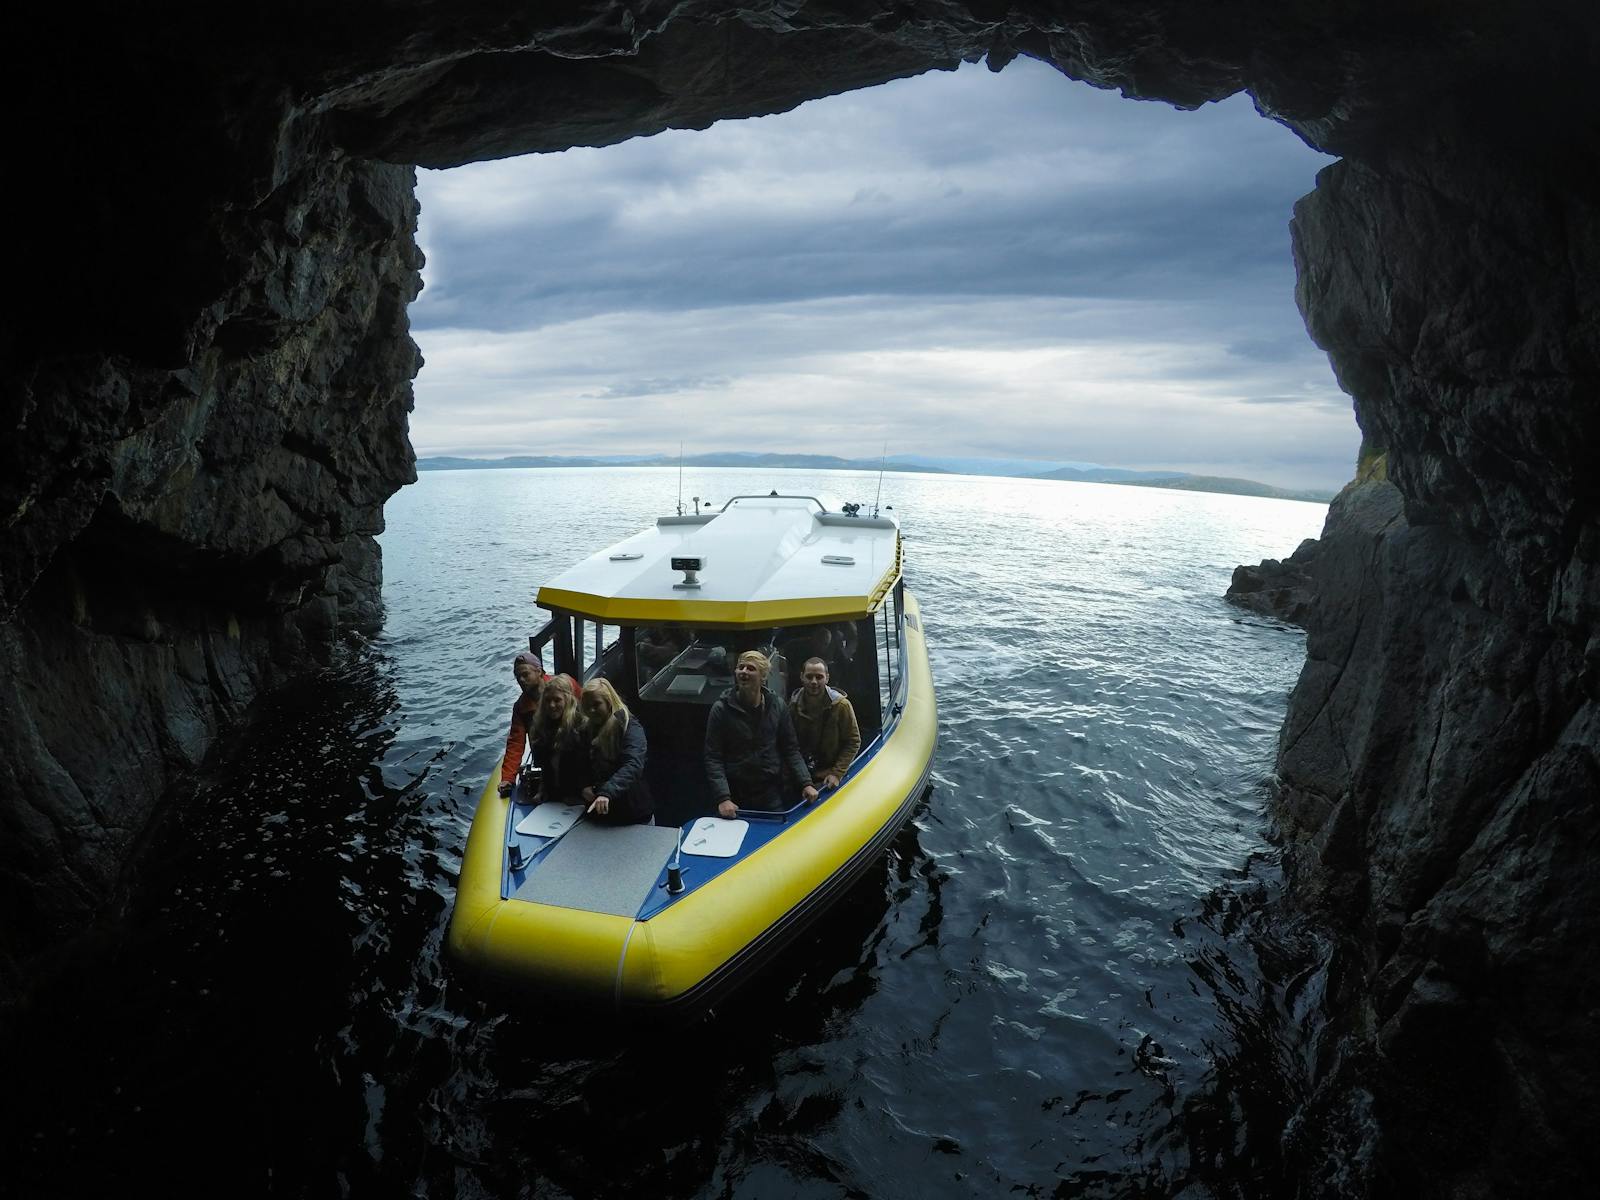 Sea cave at Betsey Island